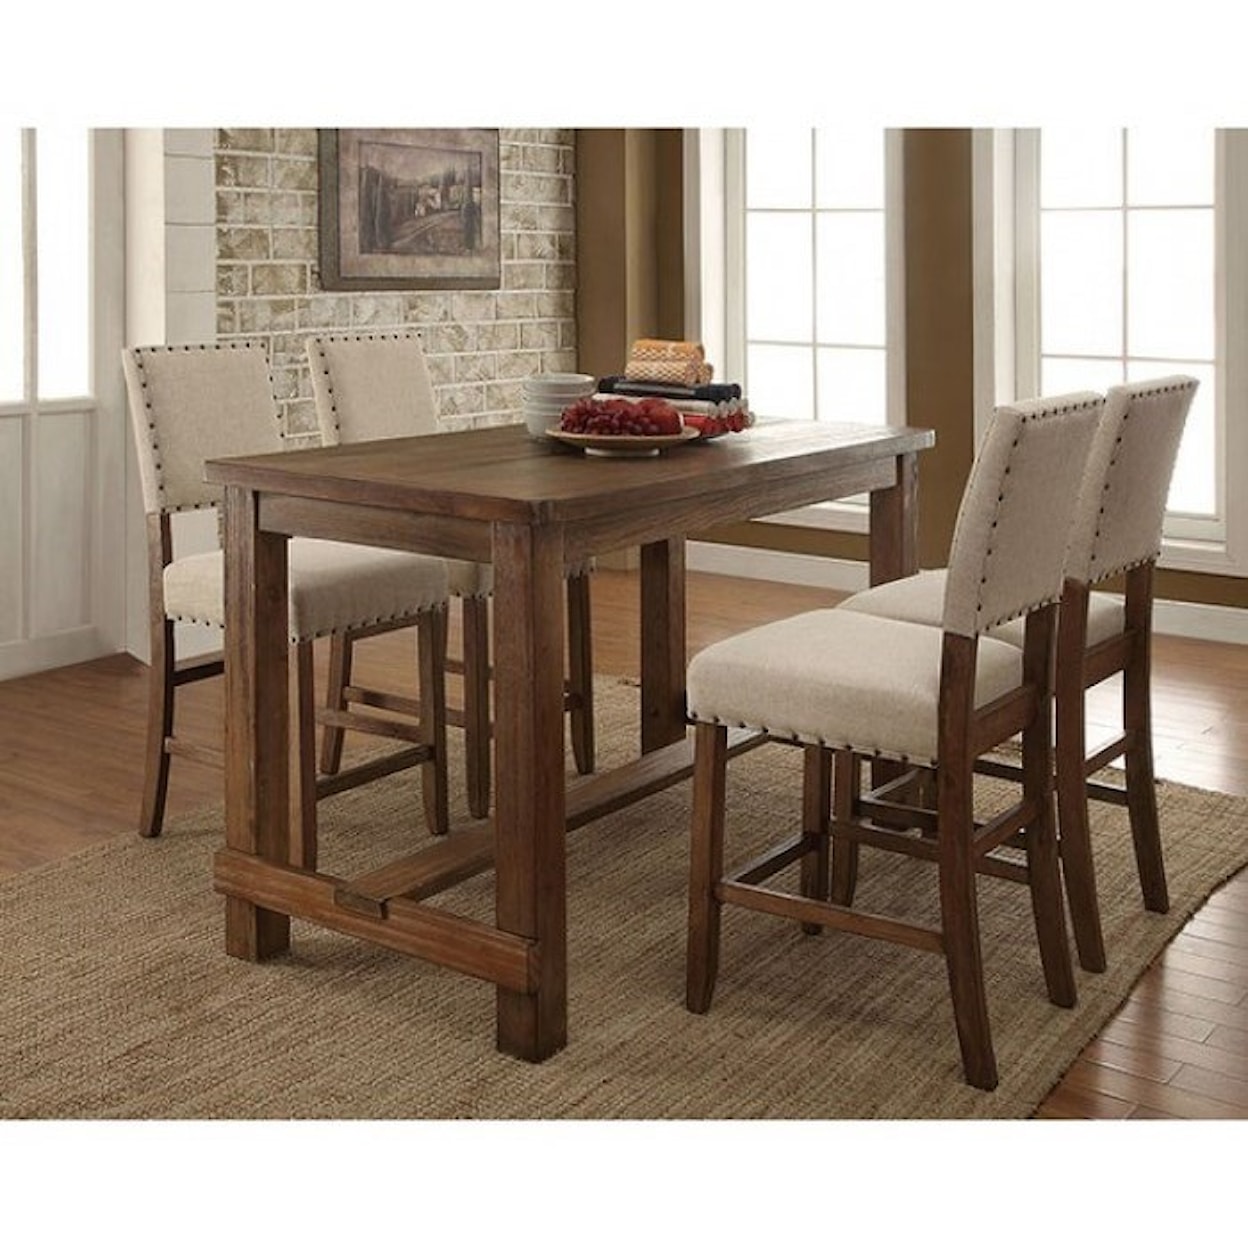 Furniture of America Sania III Counter Height Chair